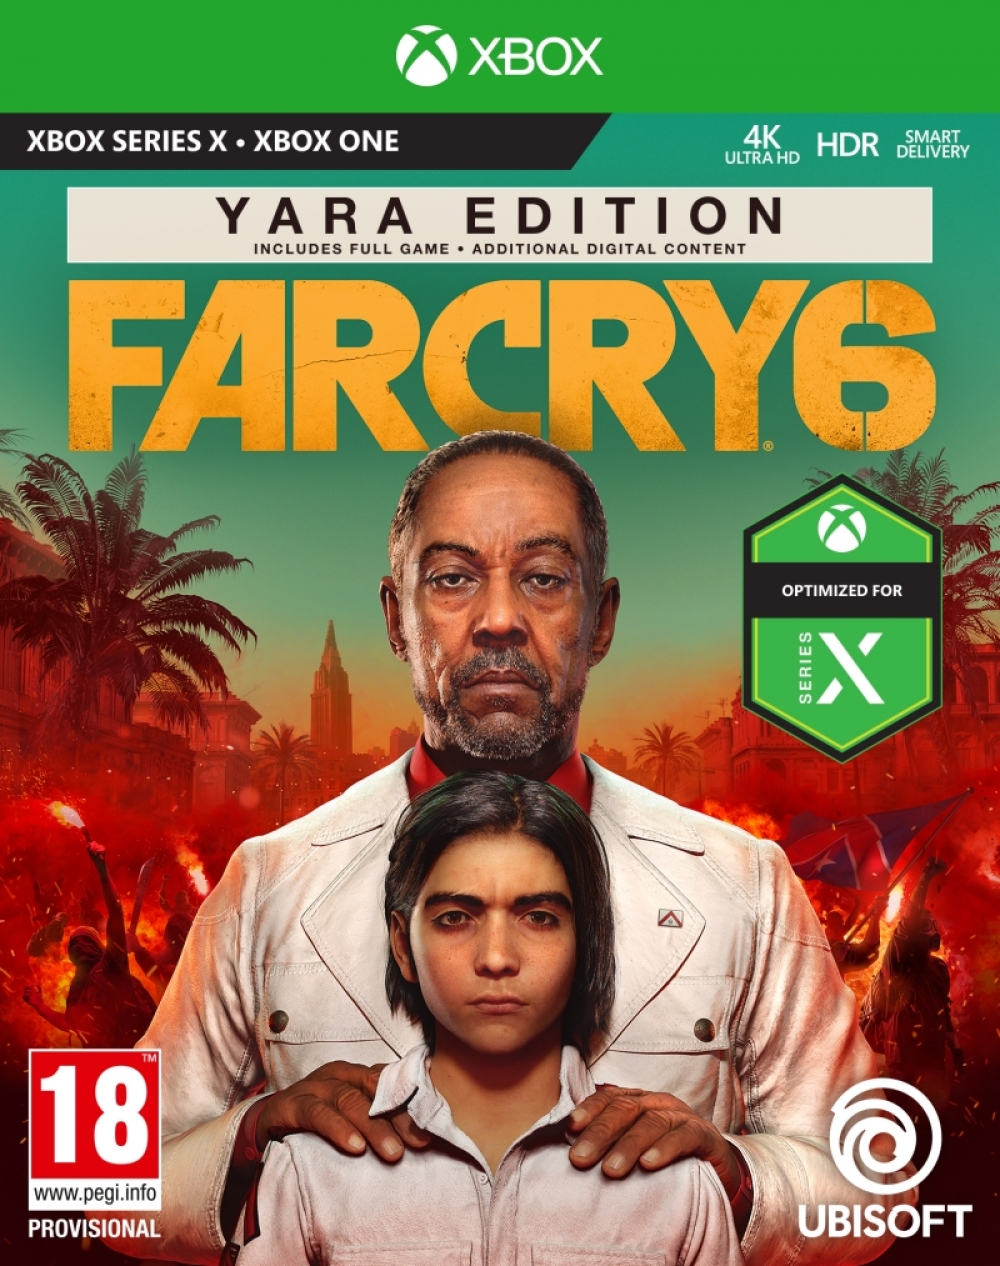 Far cry 6 yara edition - xbox series x